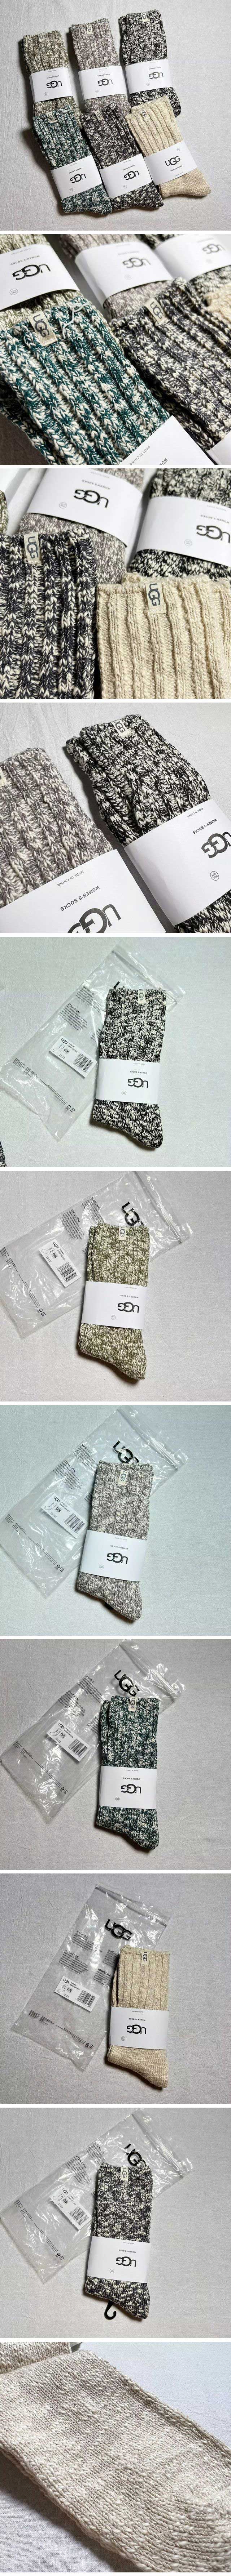 UGG Winter Knit Socks アグ ウィンター ニット ソックス